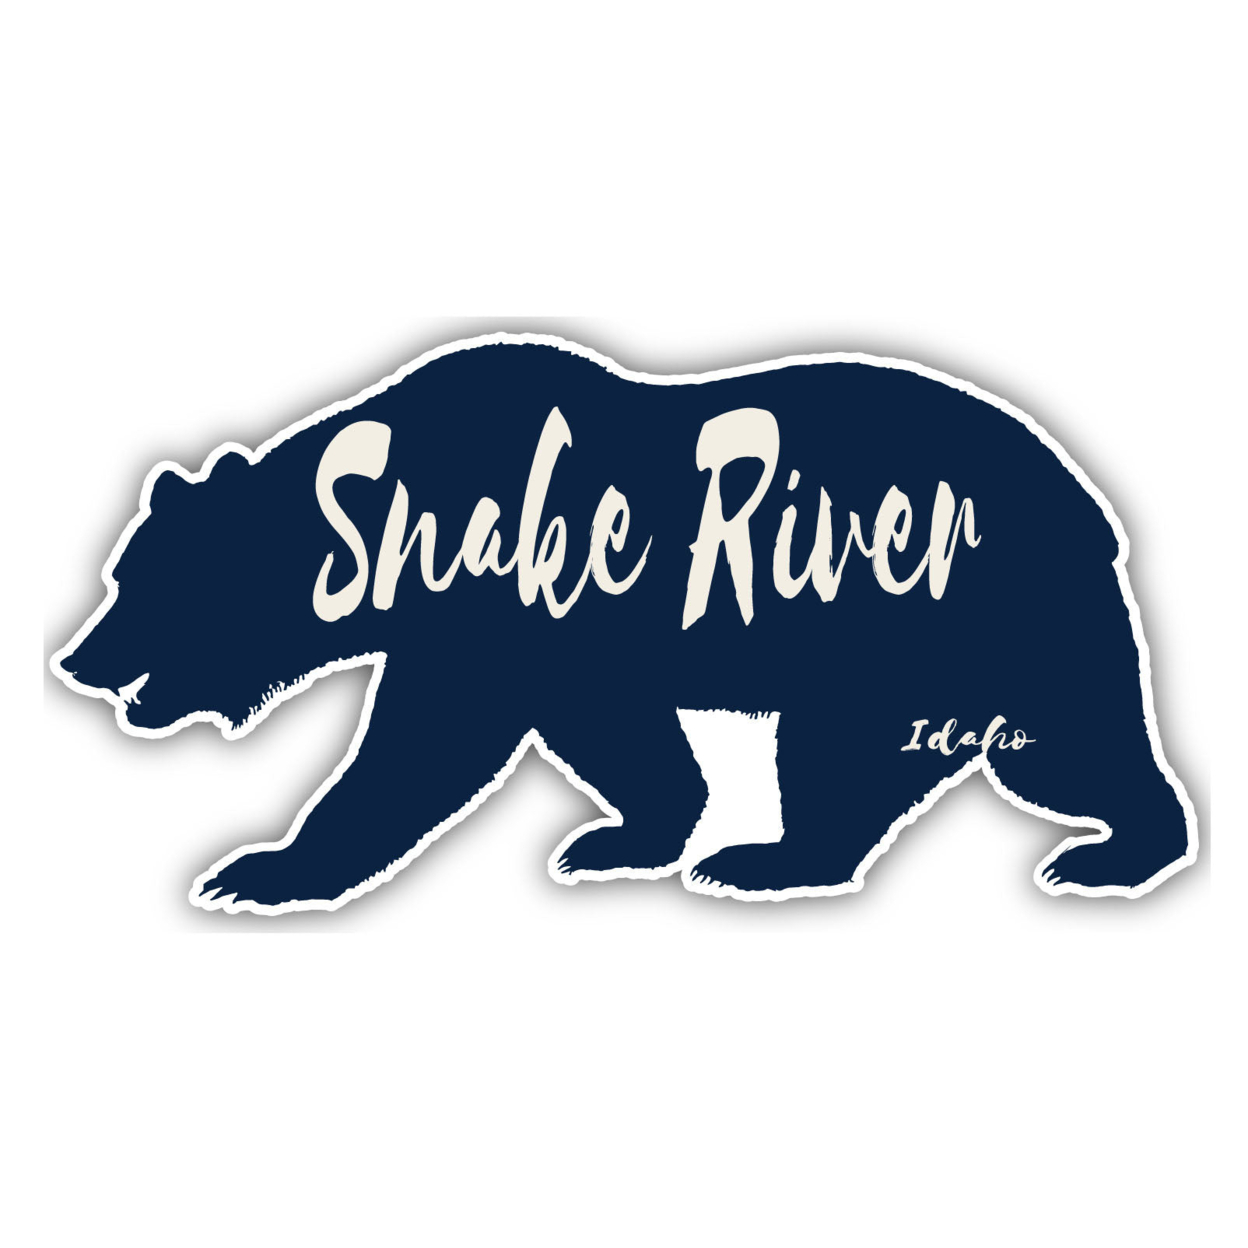 Snake River Idaho Souvenir Decorative Stickers (Choose Theme And Size) - Single Unit, 2-Inch, Camp Life